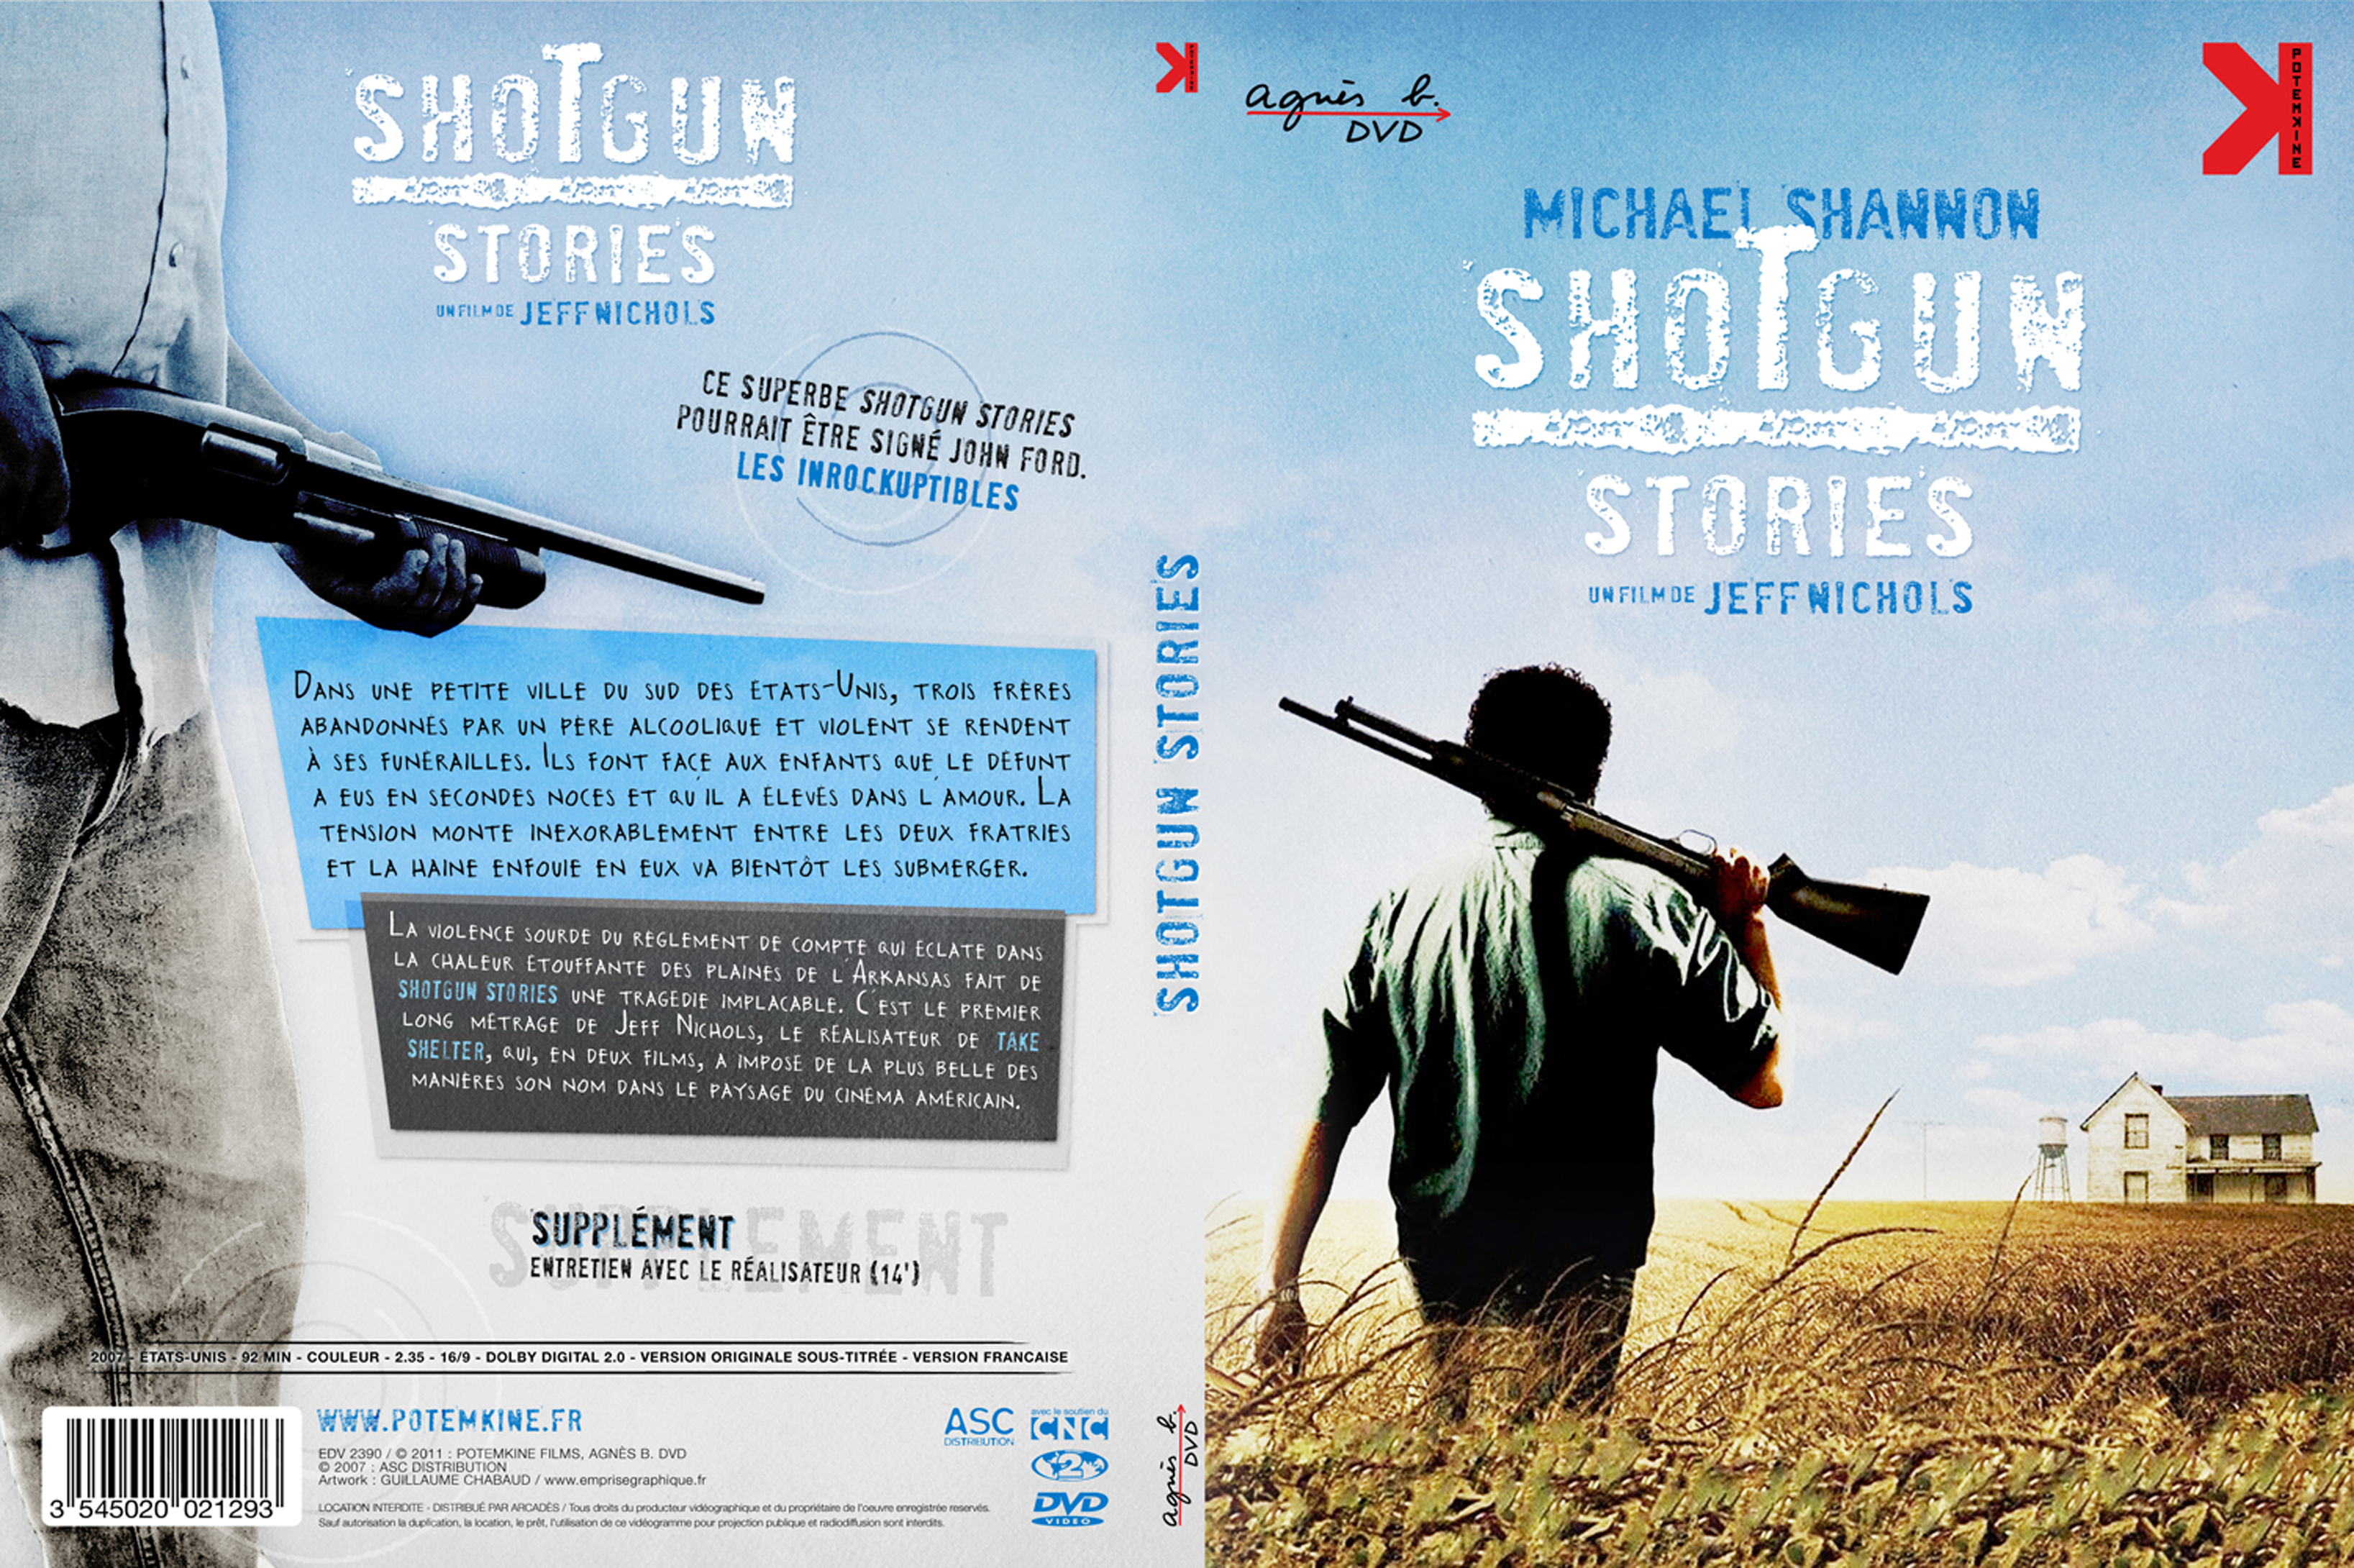 Jaquette DVD Shotgun stories